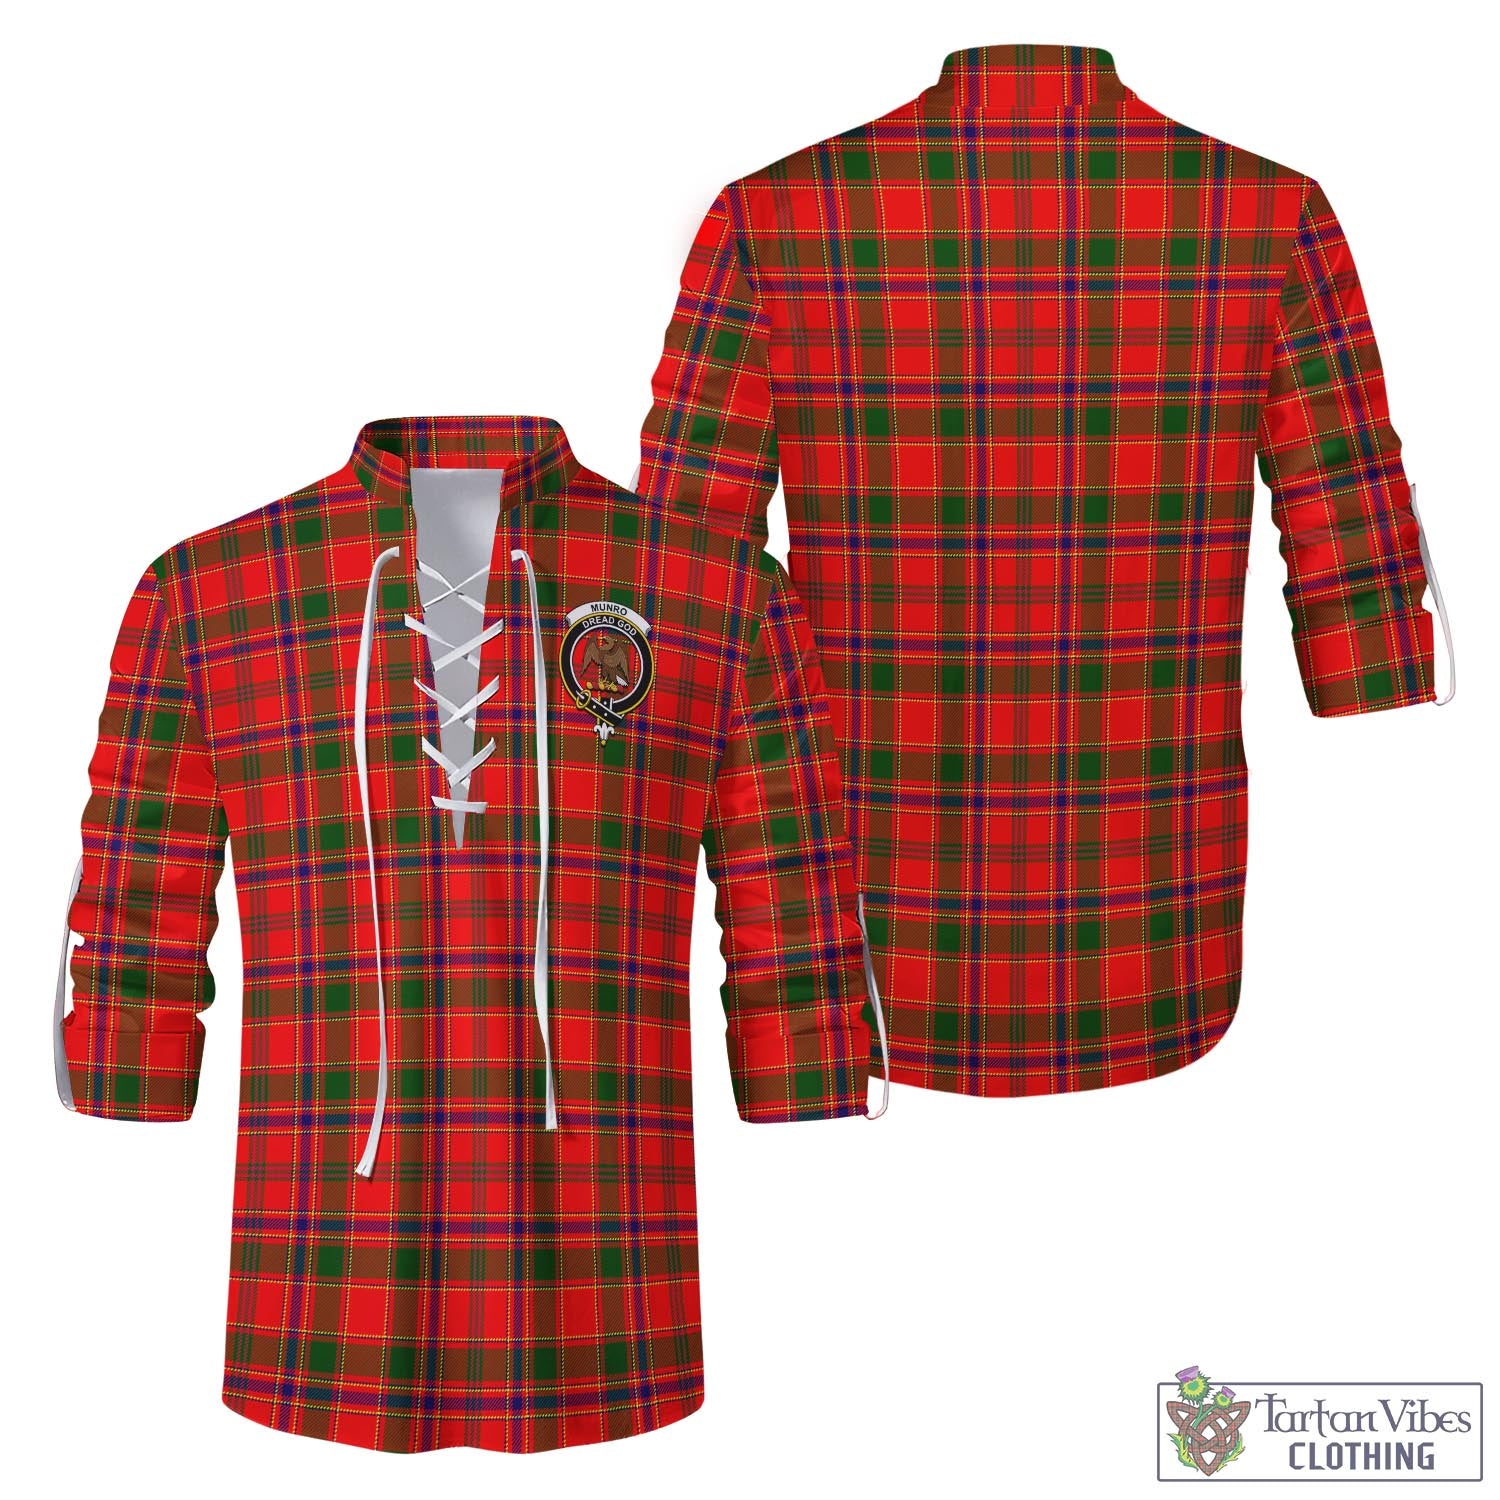 Tartan Vibes Clothing Munro Modern Tartan Men's Scottish Traditional Jacobite Ghillie Kilt Shirt with Family Crest